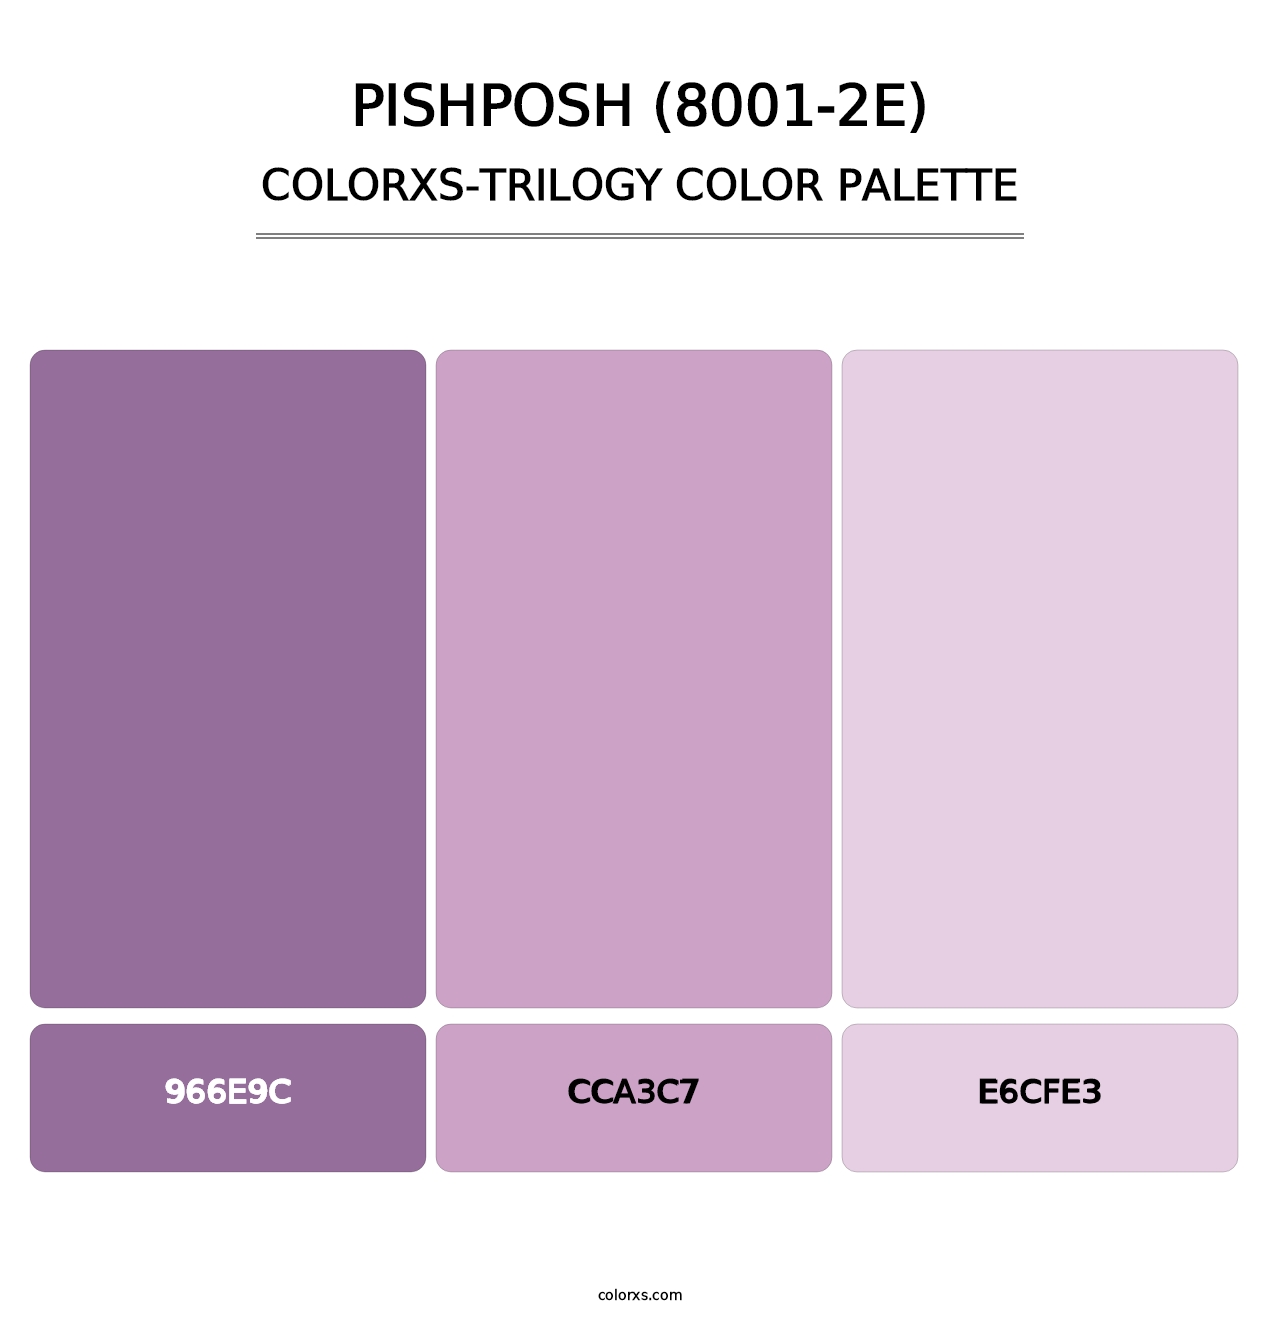 Pishposh (8001-2E) - Colorxs Trilogy Palette